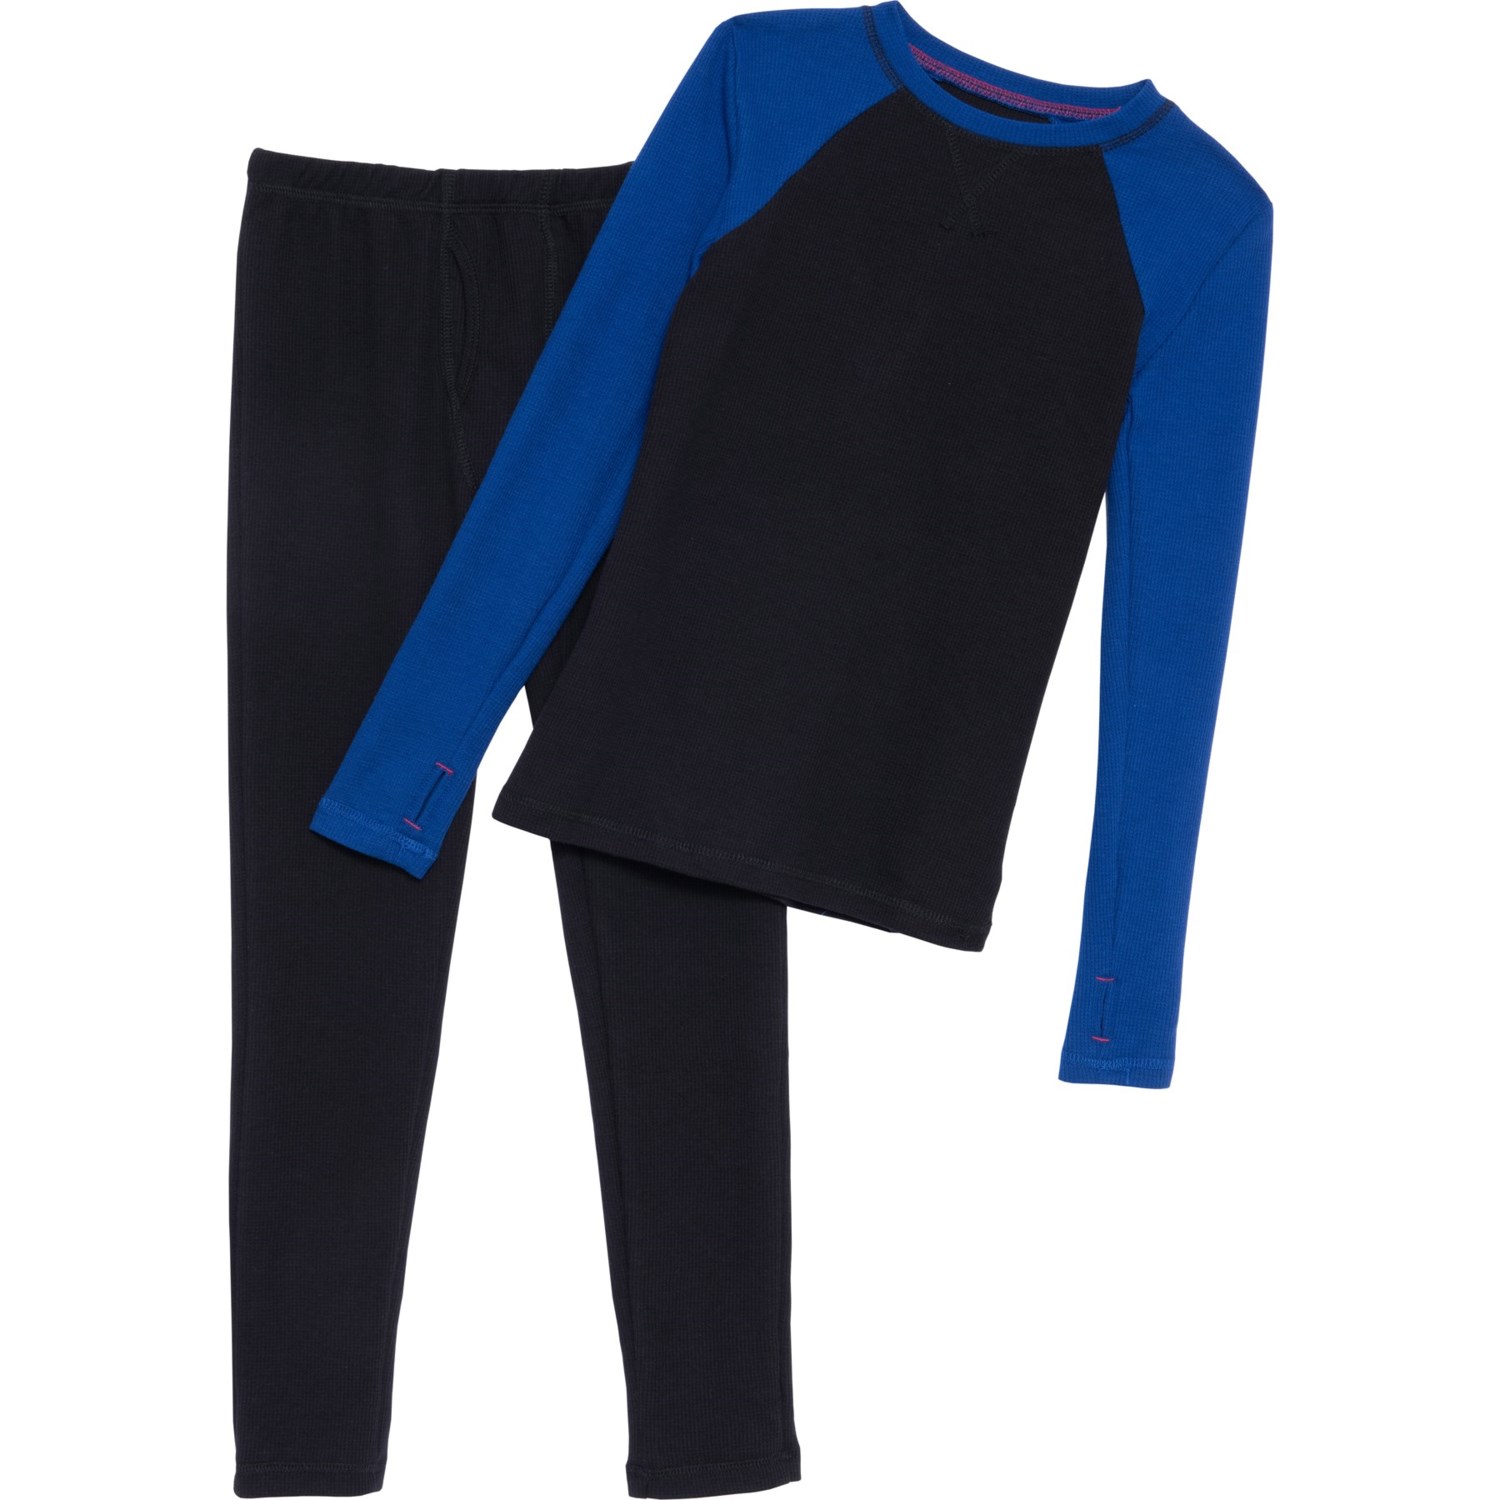 https://i.stpost.com/cuddl-duds-big-boys-thermal-high-performance-base-layer-top-and-pants-set-long-sleeve-in-royal-blue-black~p~1vuna_01~1500.2.jpg